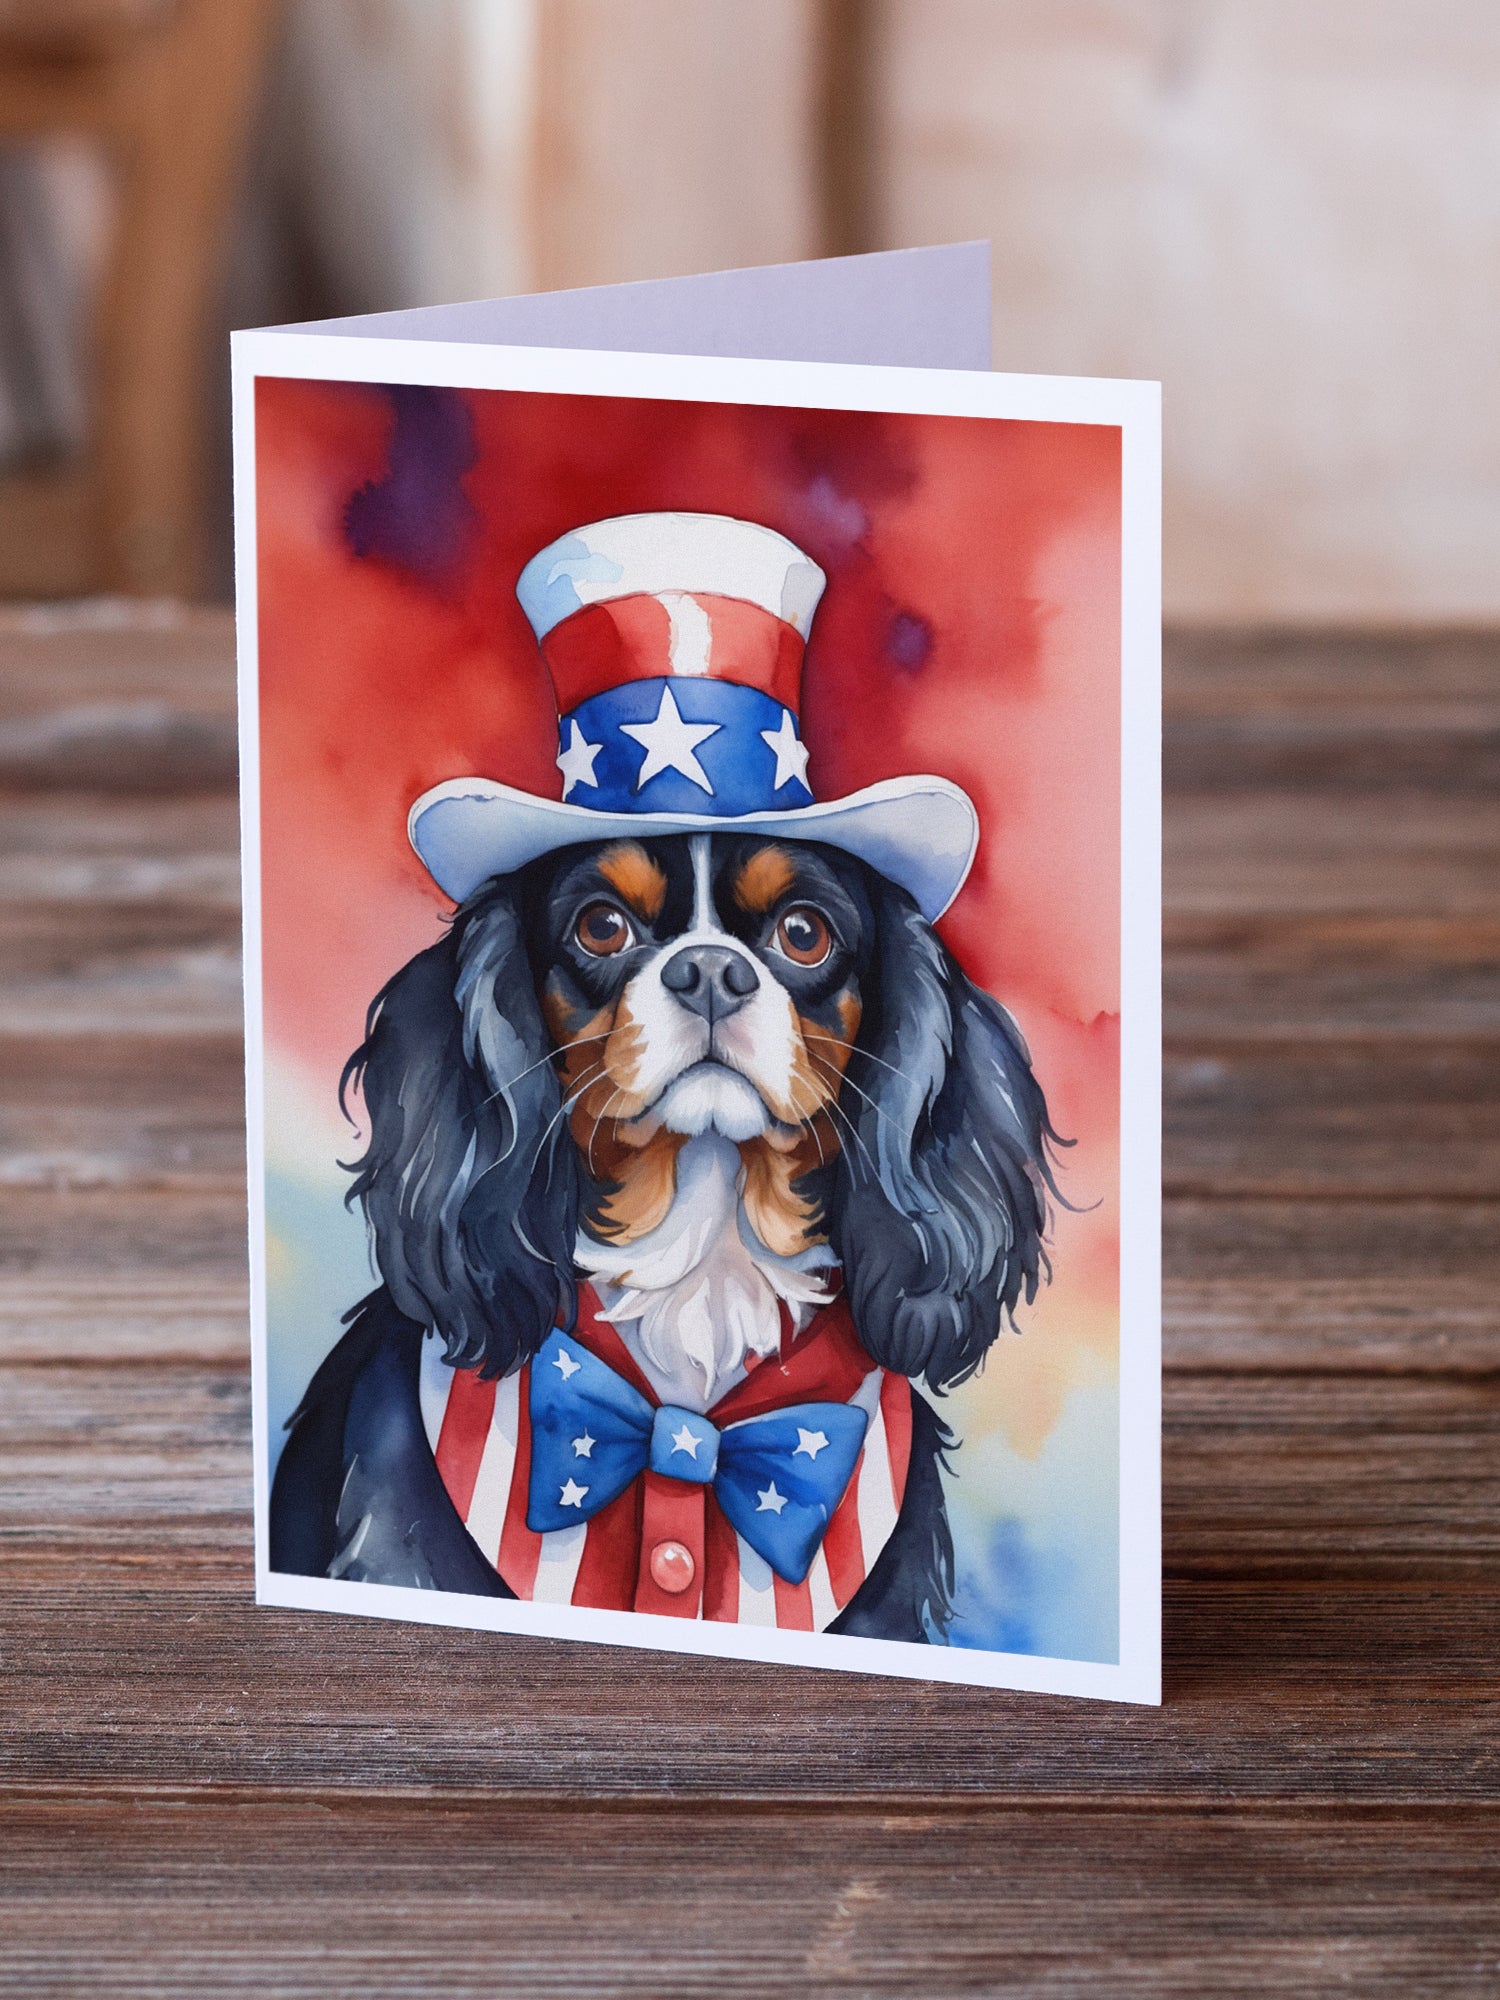 Buy this Cavalier Spaniel Patriotic American Greeting Cards Pack of 8